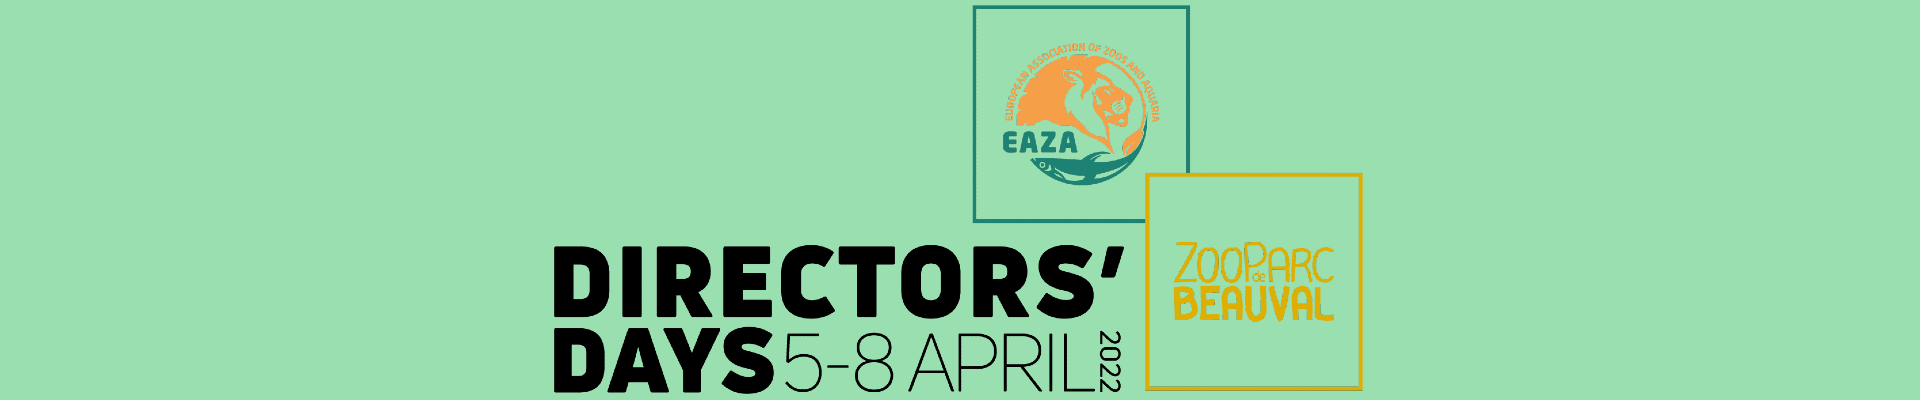 EAZA DIRECTORS' DAYS 2022